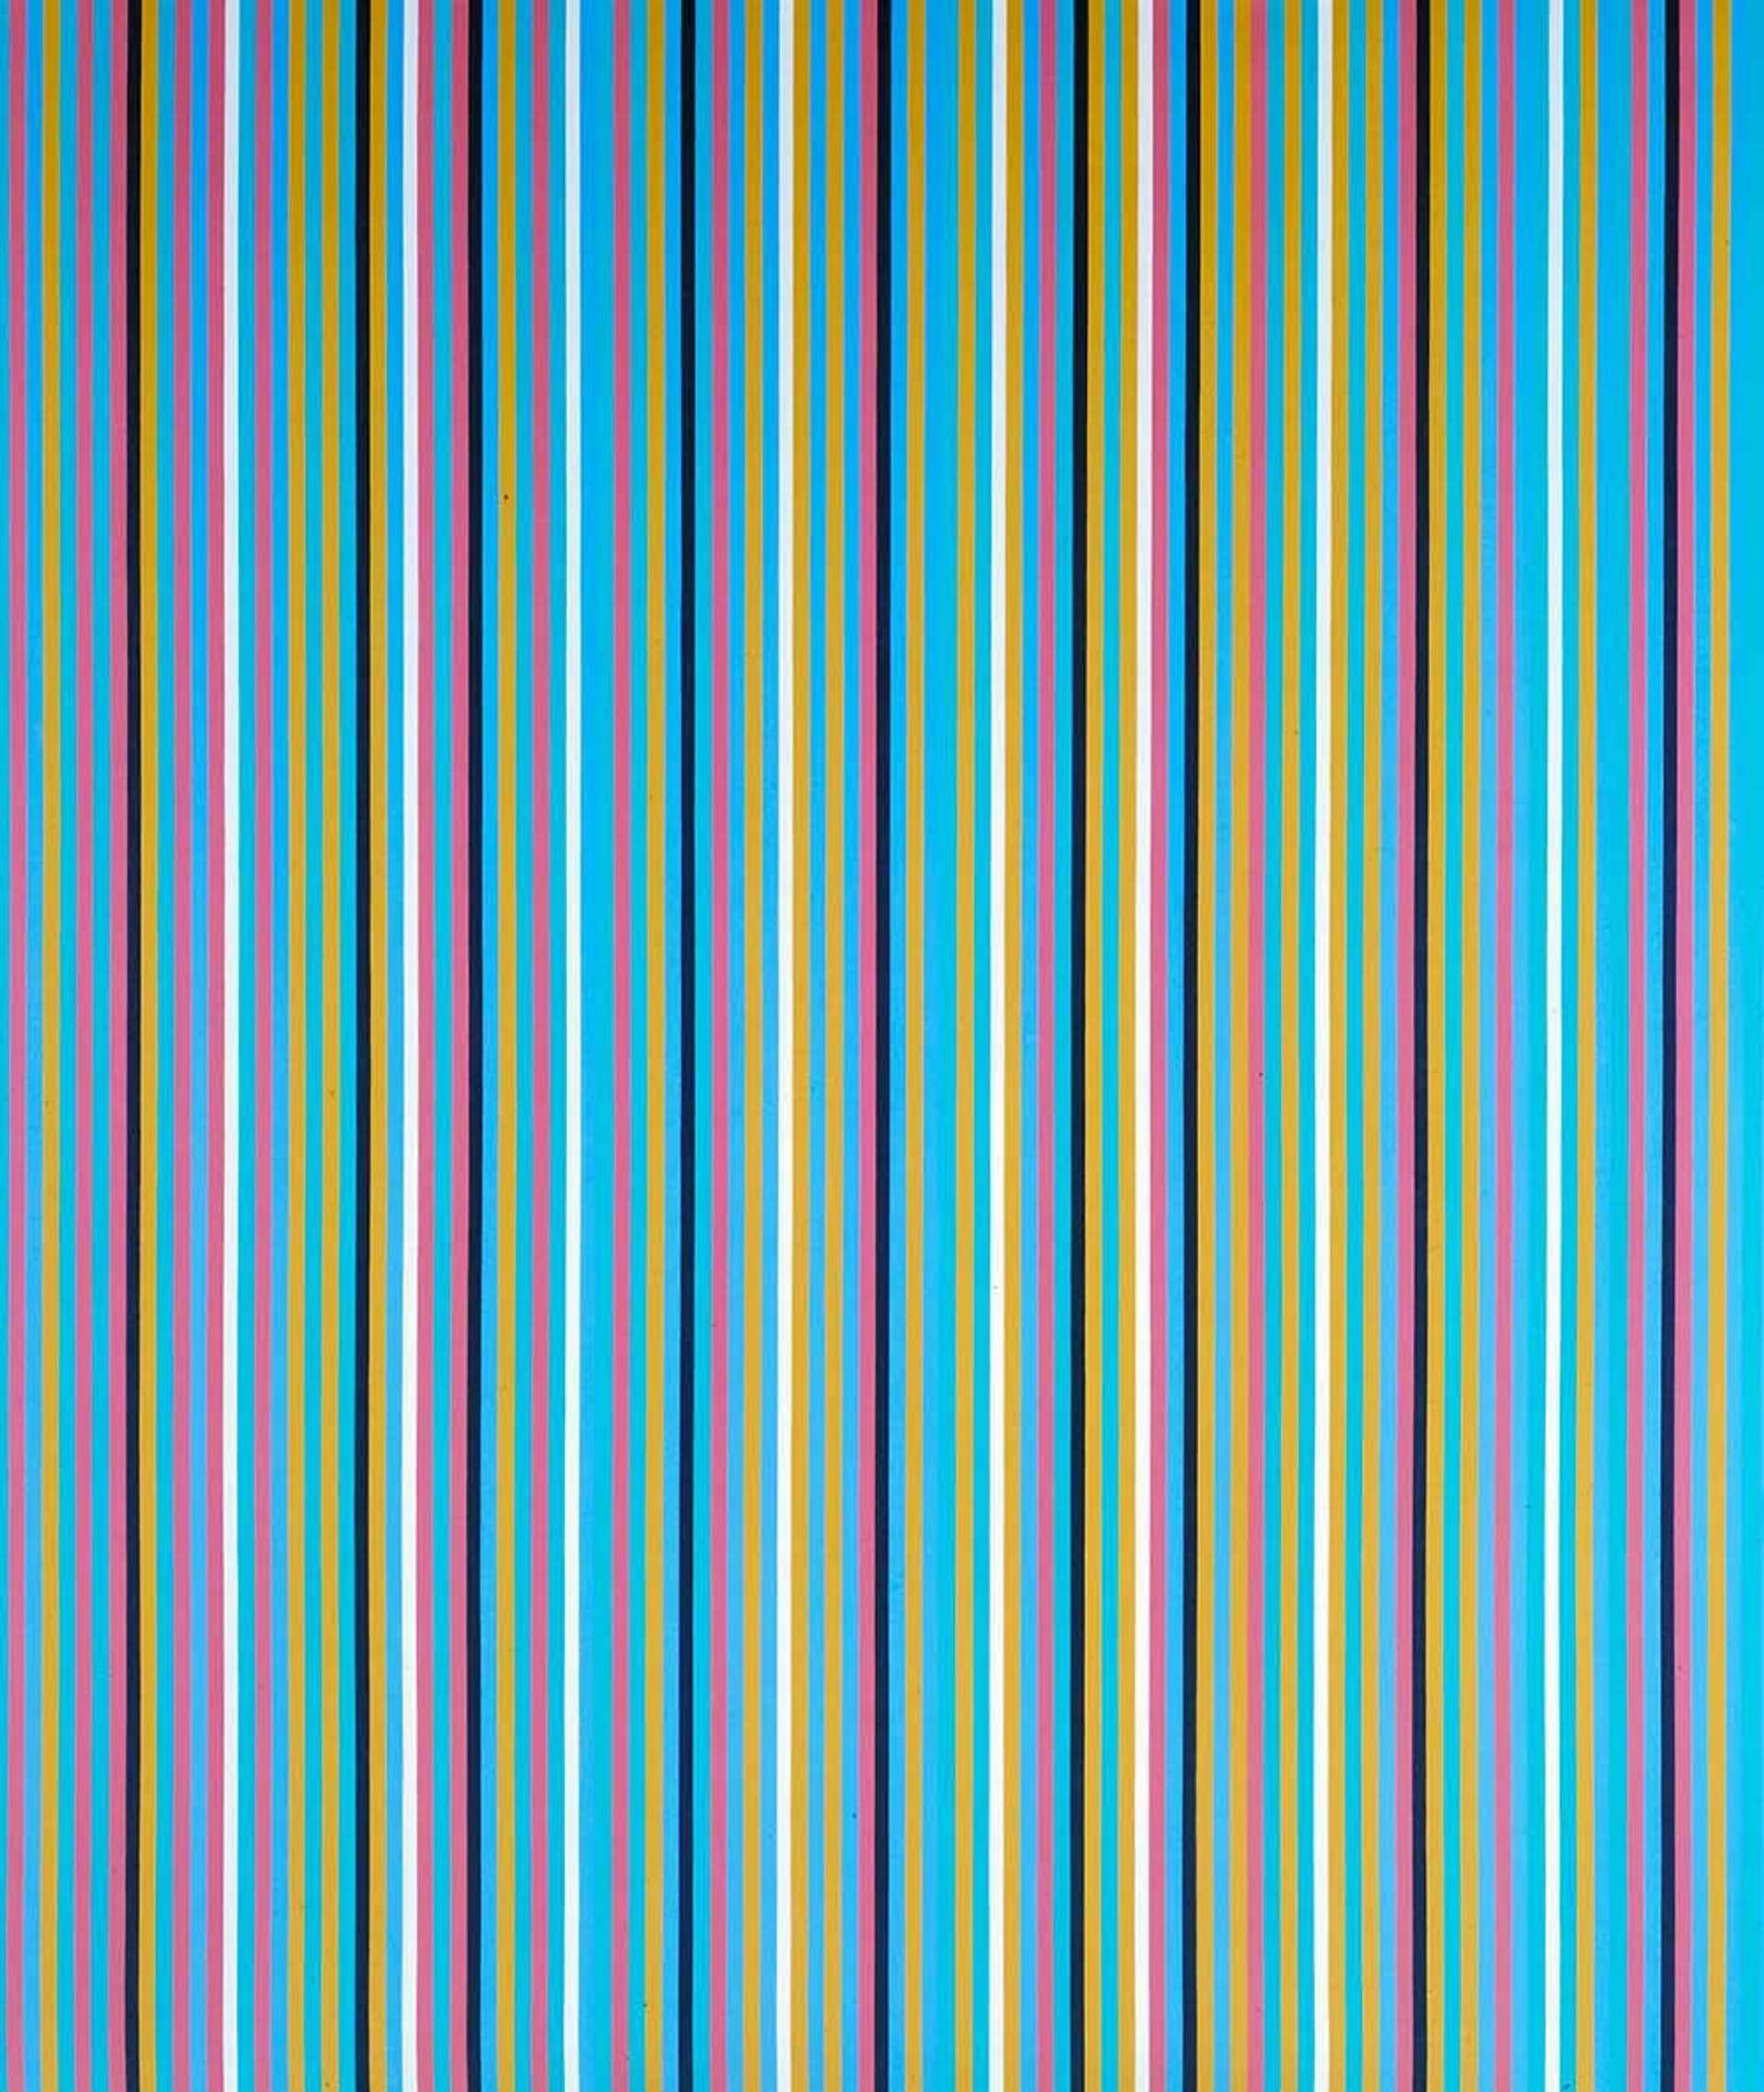 Bridget Riley’s Achæan. An optical illusion screenprint of multicoloured stripes against a white background. 